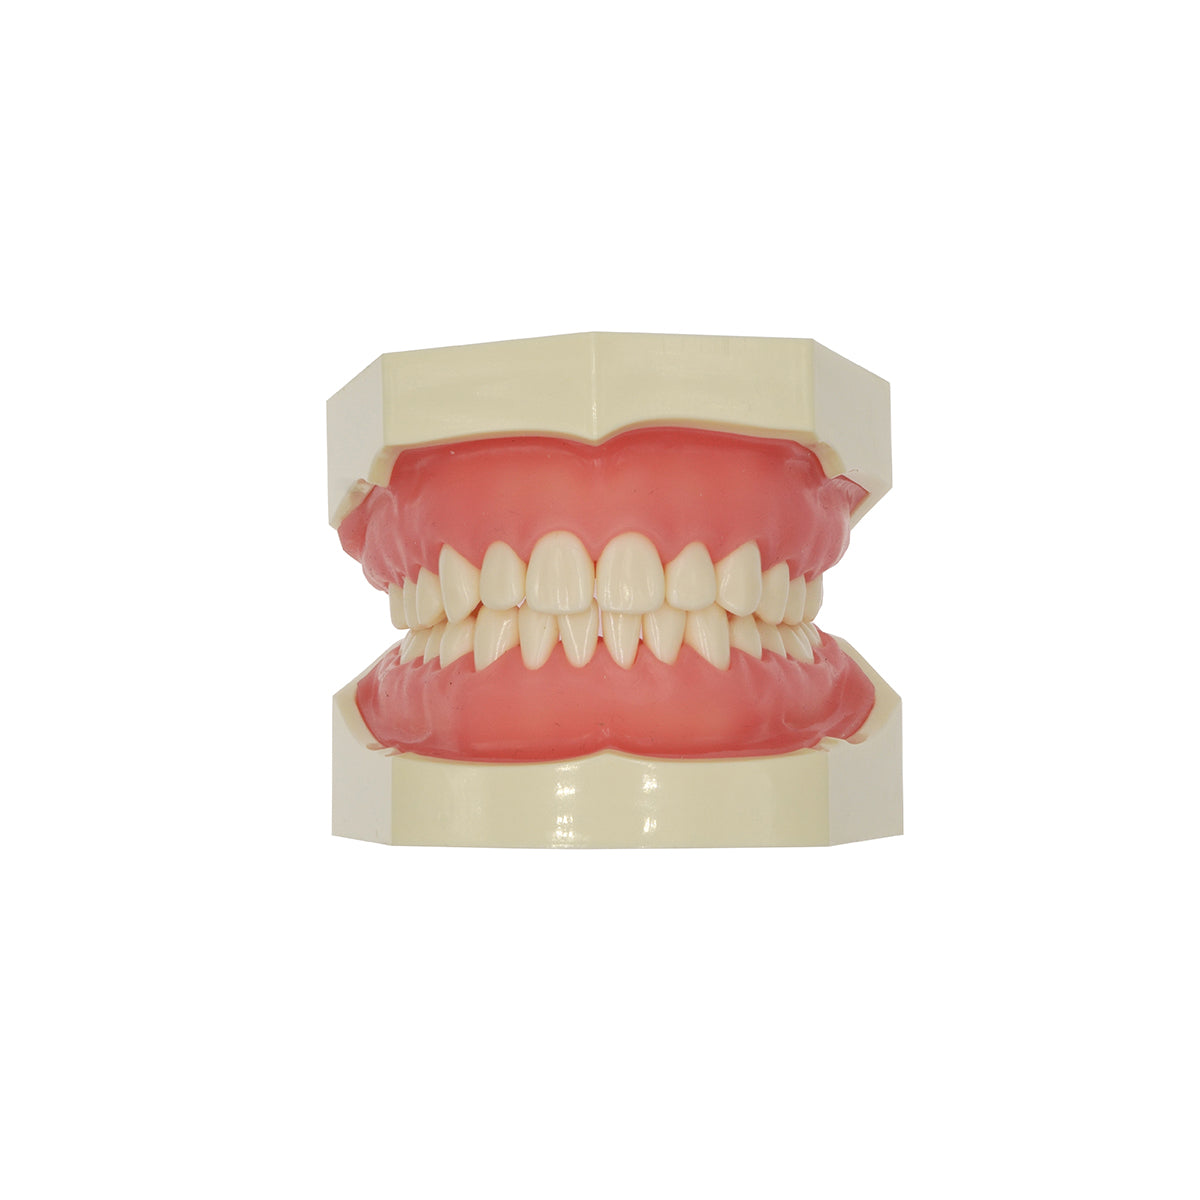 Standard Typodont 28 Teeth